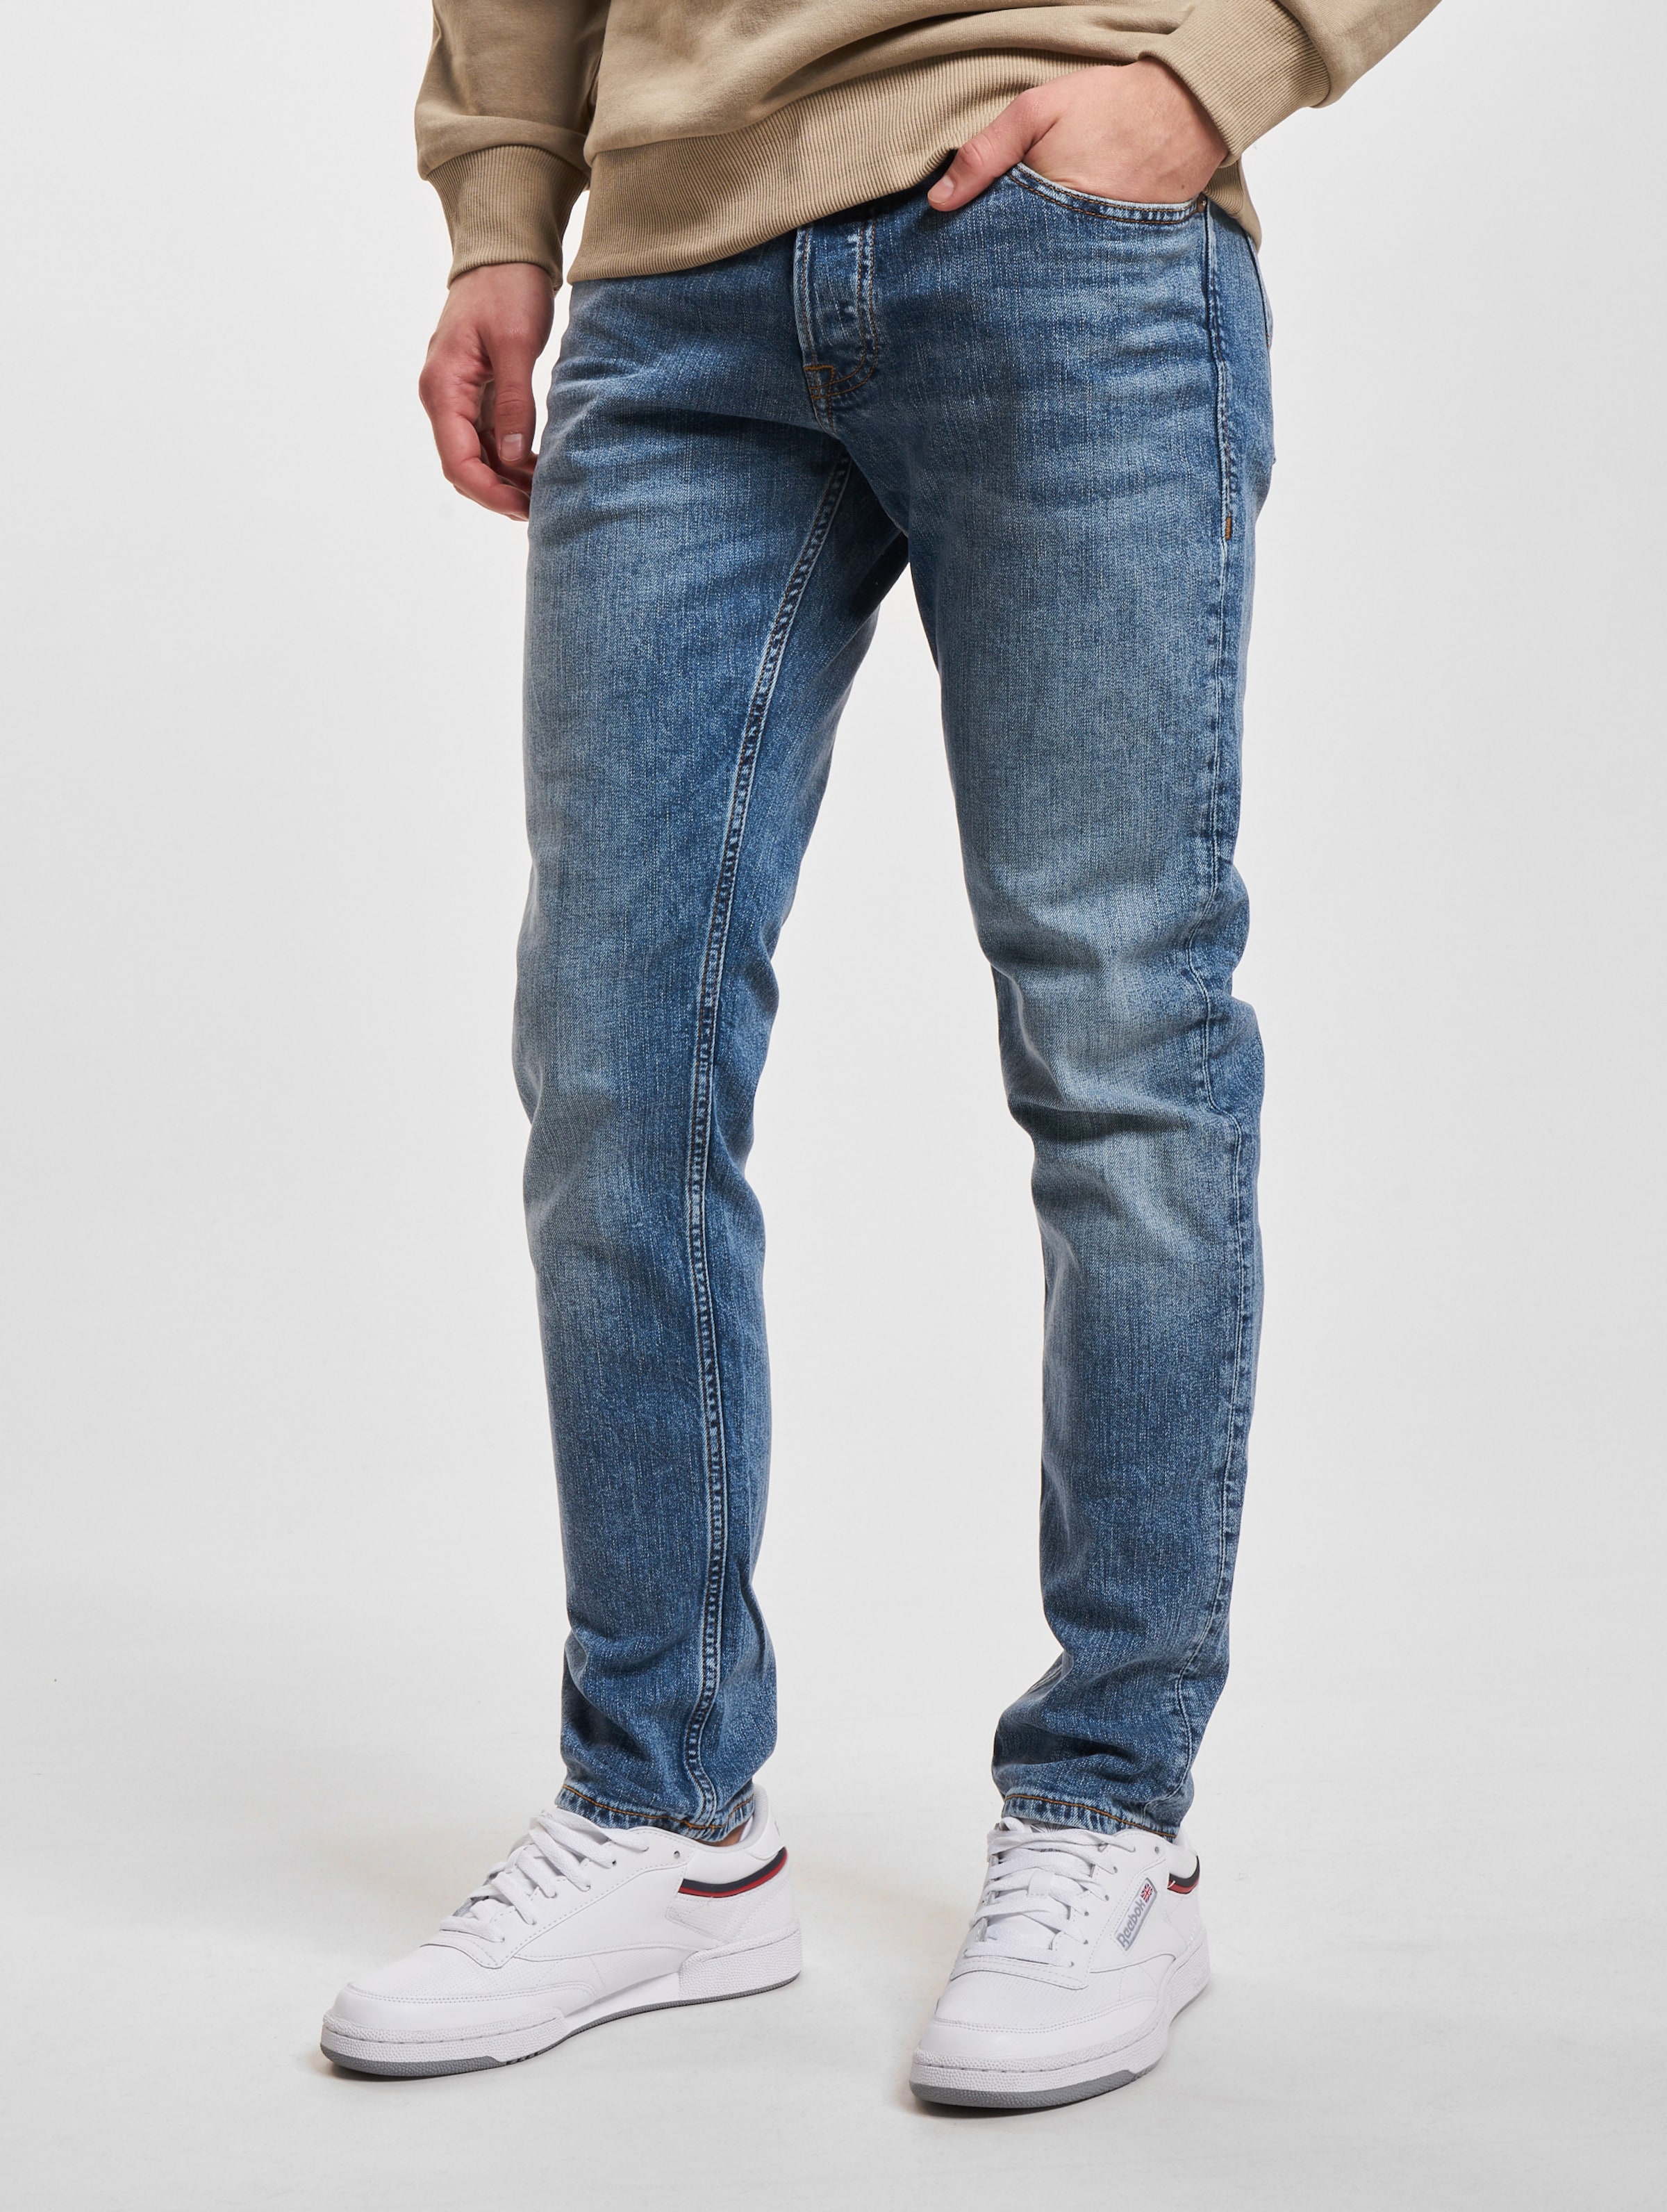 Jack & Jones Glenn Original Skinny Fit Jeans Mannen op kleur blauw, Maat 3034